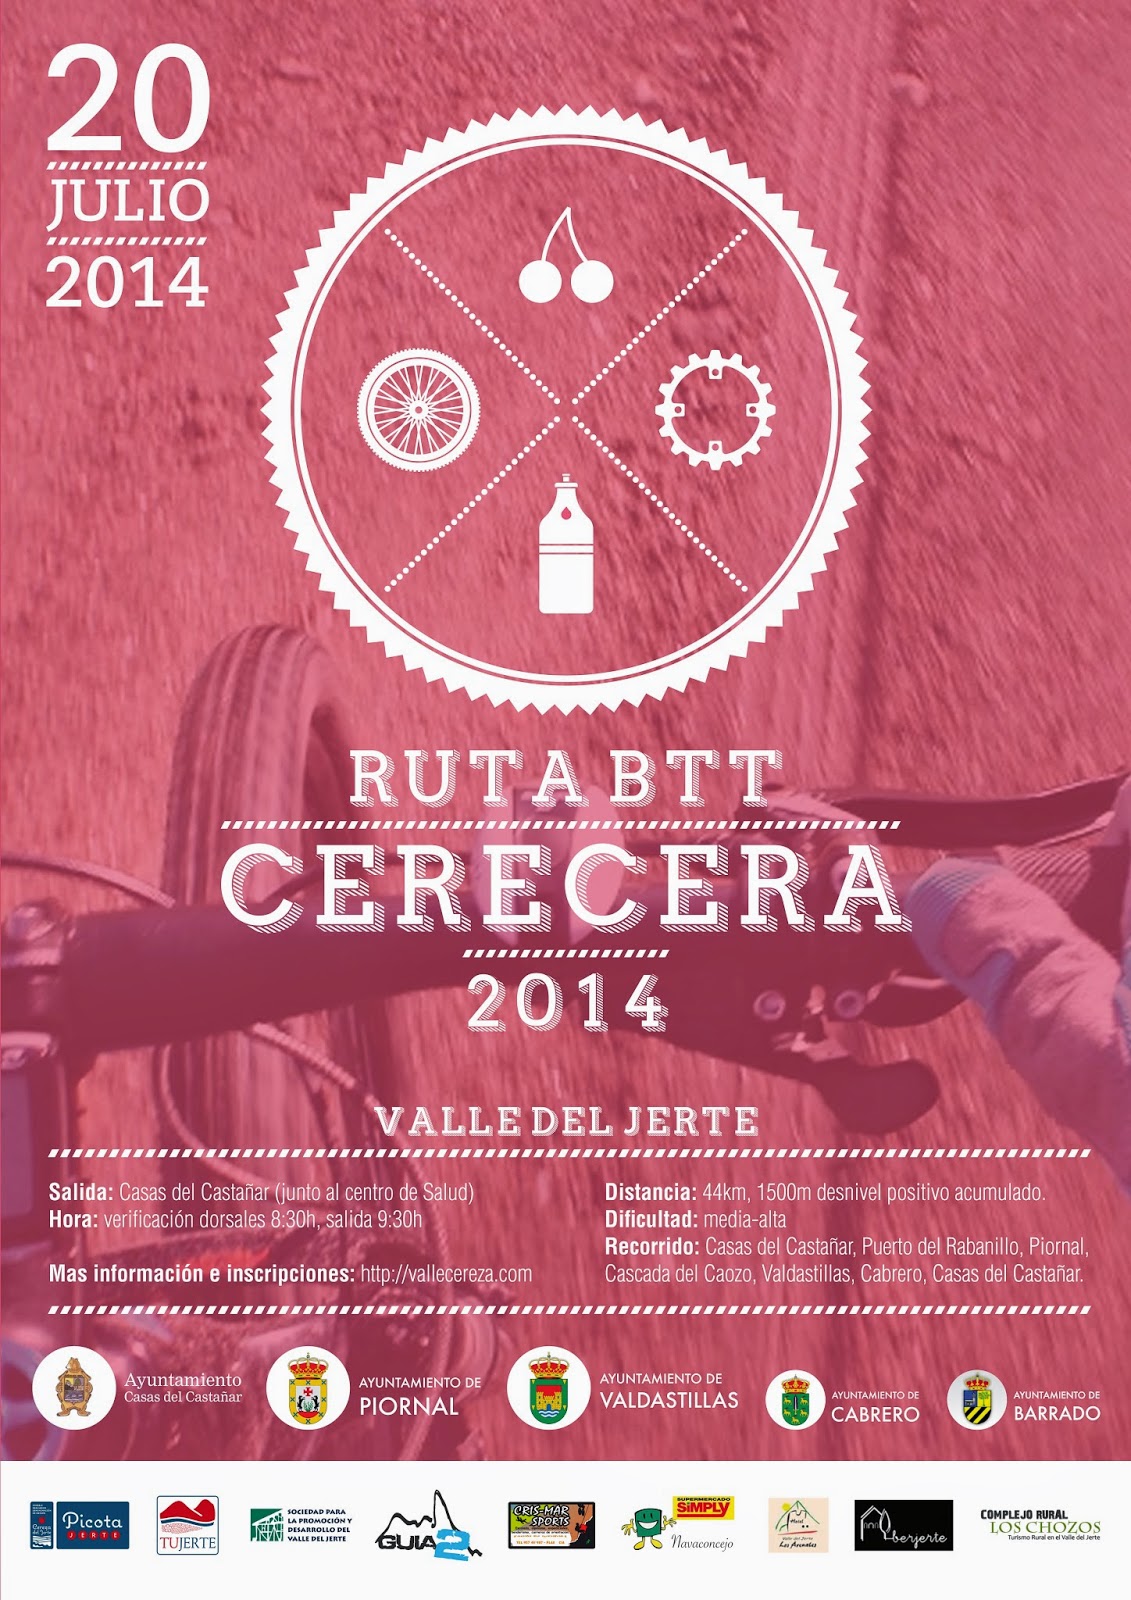 RUTA BTT "Entre Cerezos" Cerecera 2014, Valle del Jerte